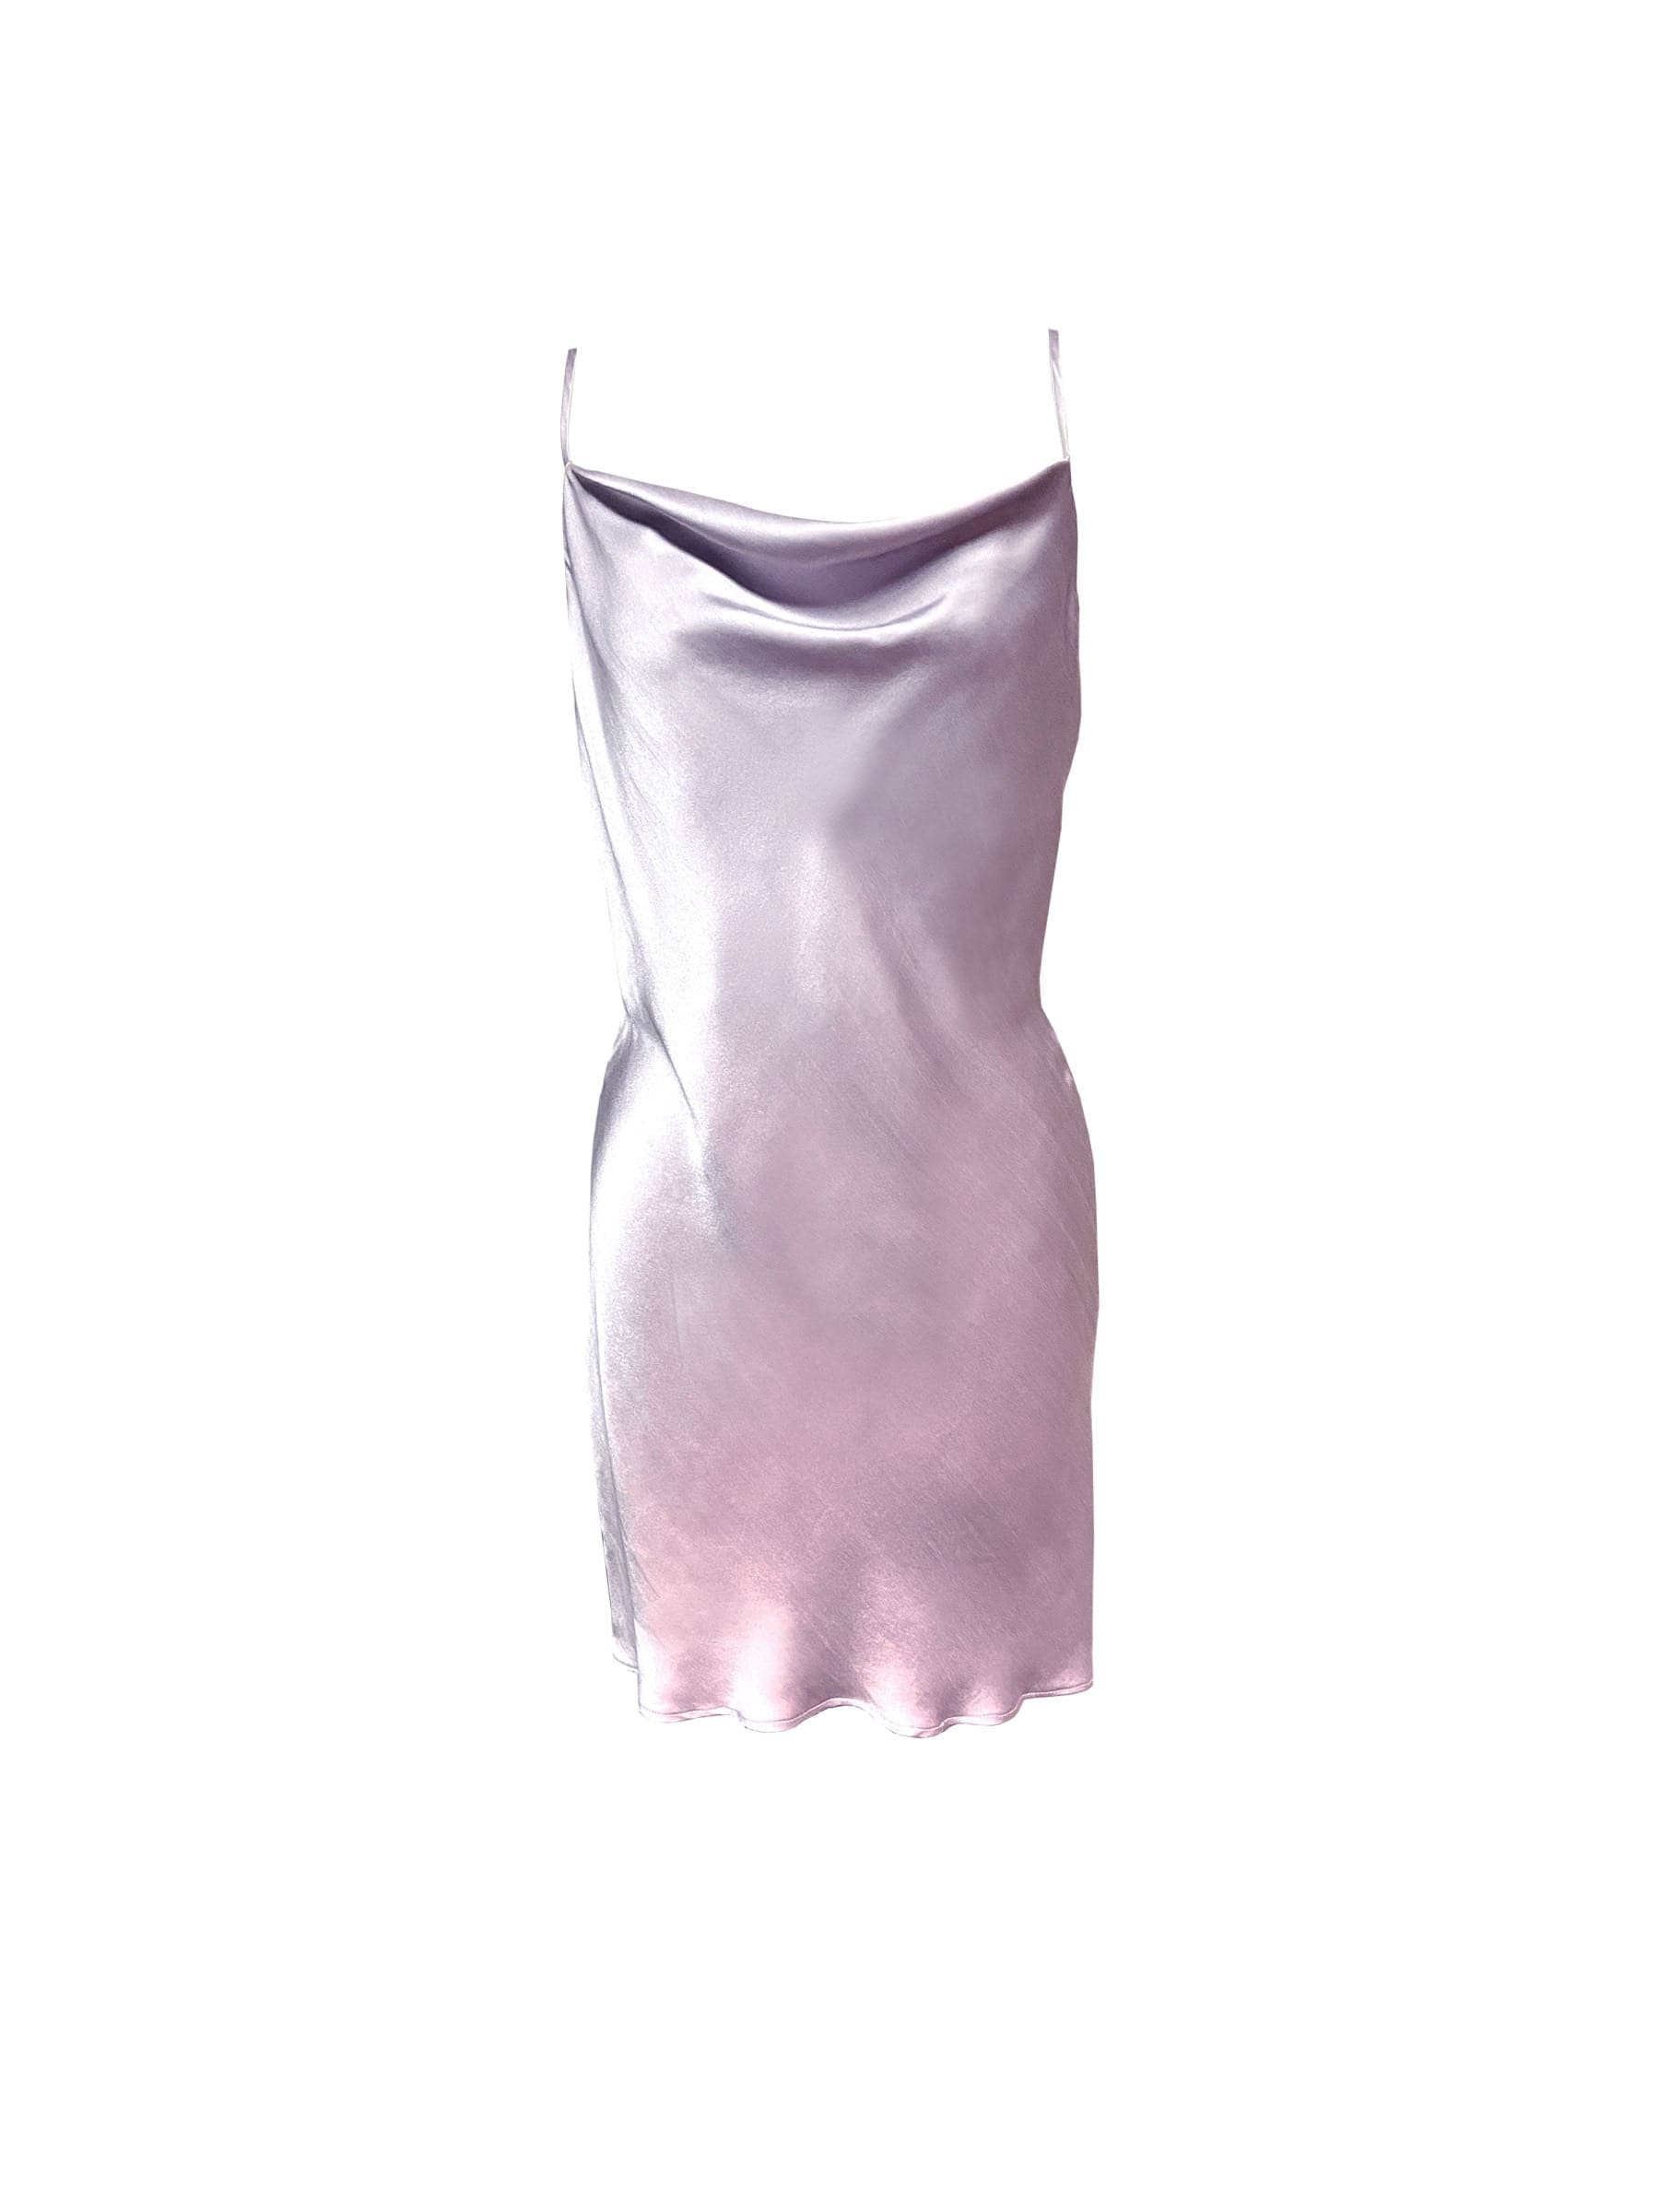 Lilac silk charmeuse bias cut slip dress